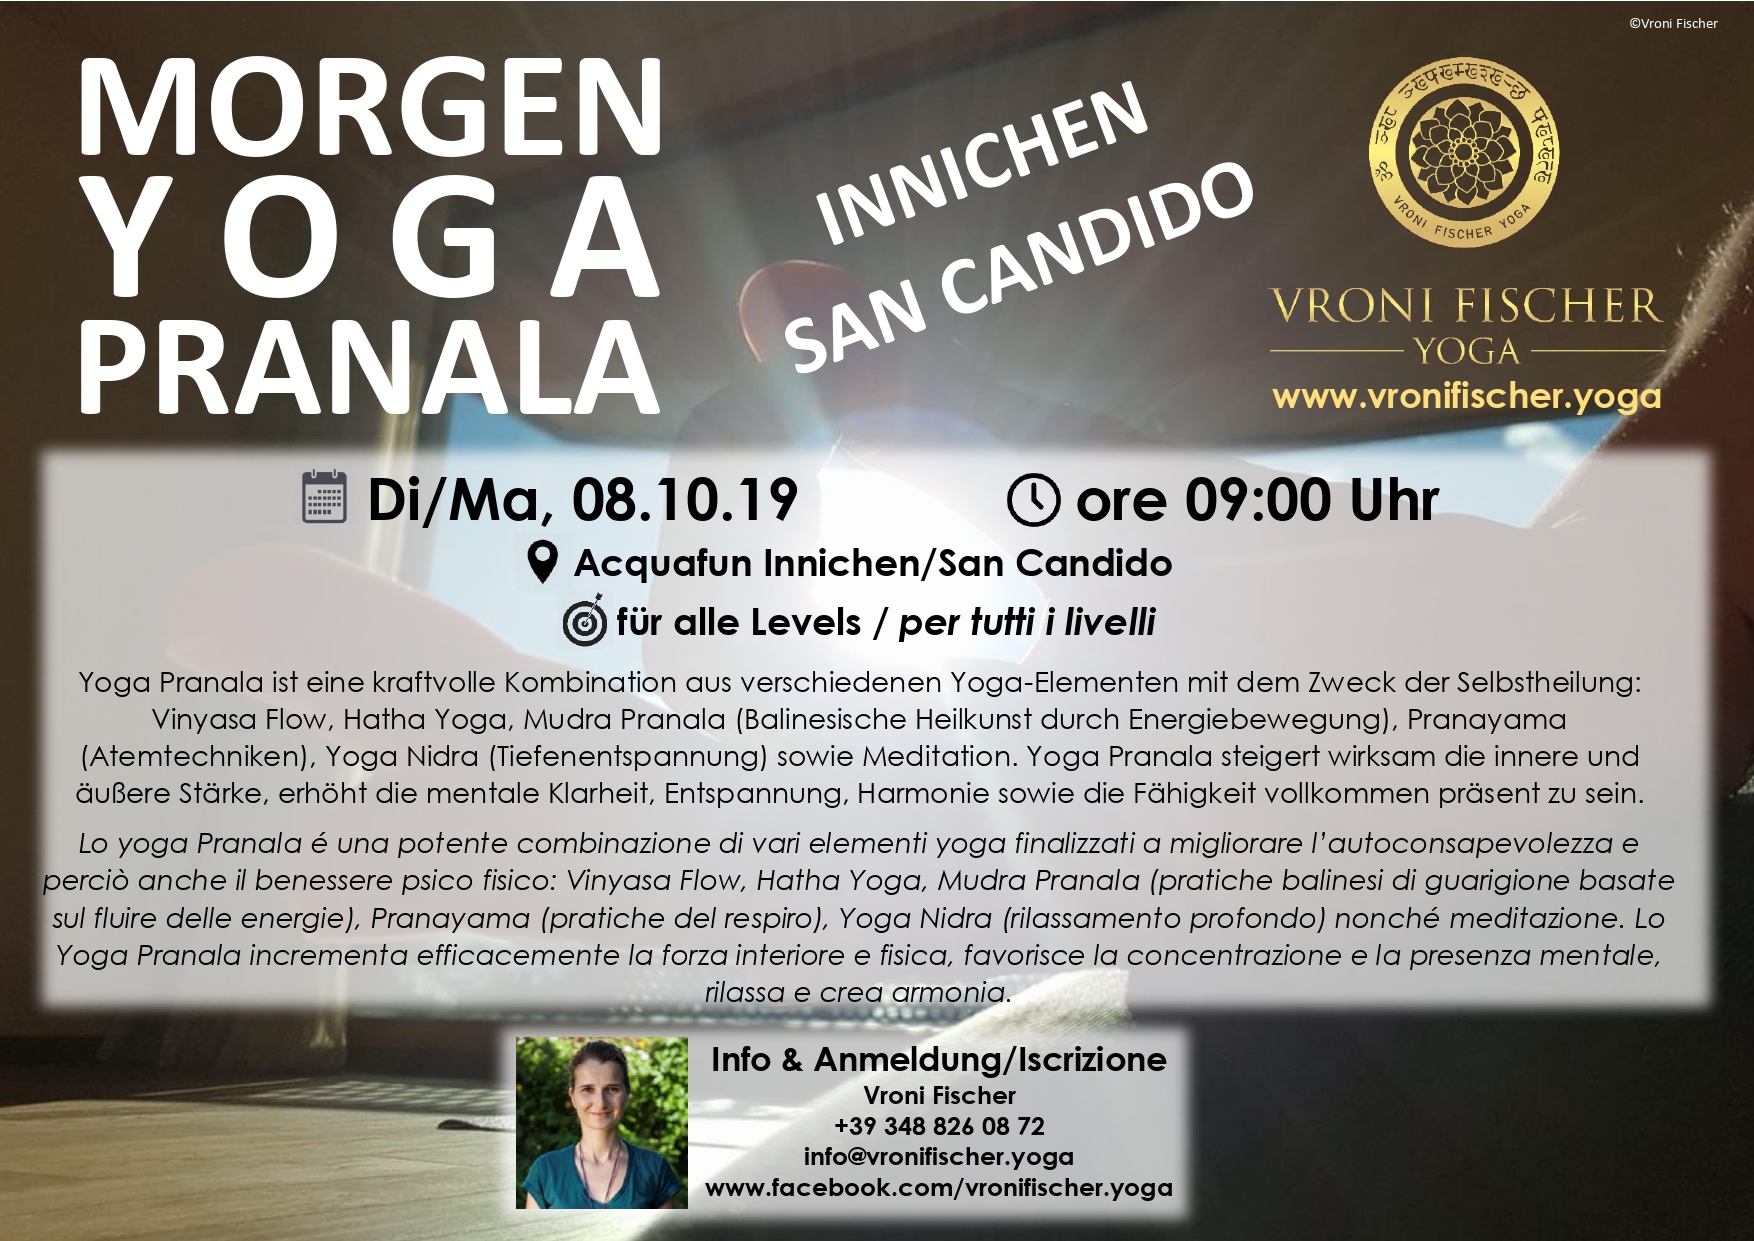 https://www.vronifischer.yoga/kurse-corsi/innichen-san-candido/